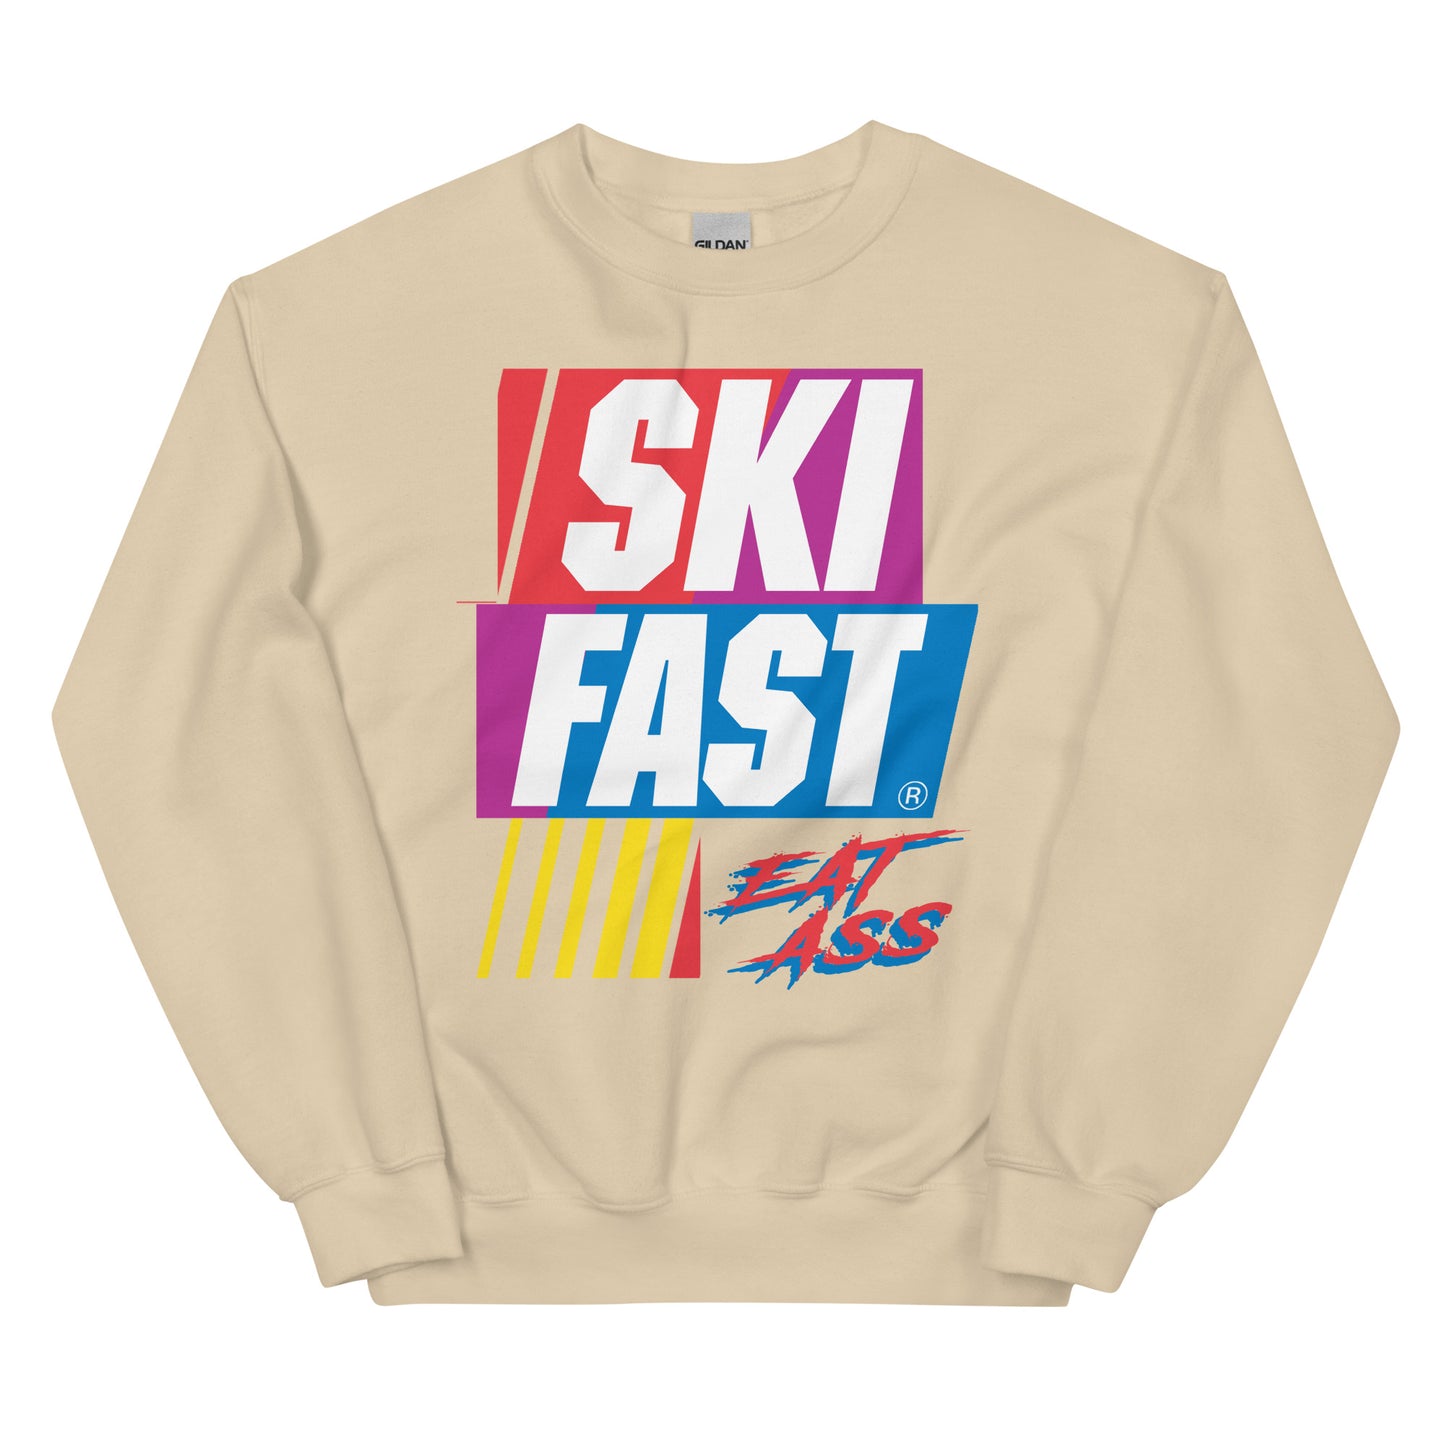 Ski Fast Eat Ass printed Crewneck sweatshirt by Whistler Shirts